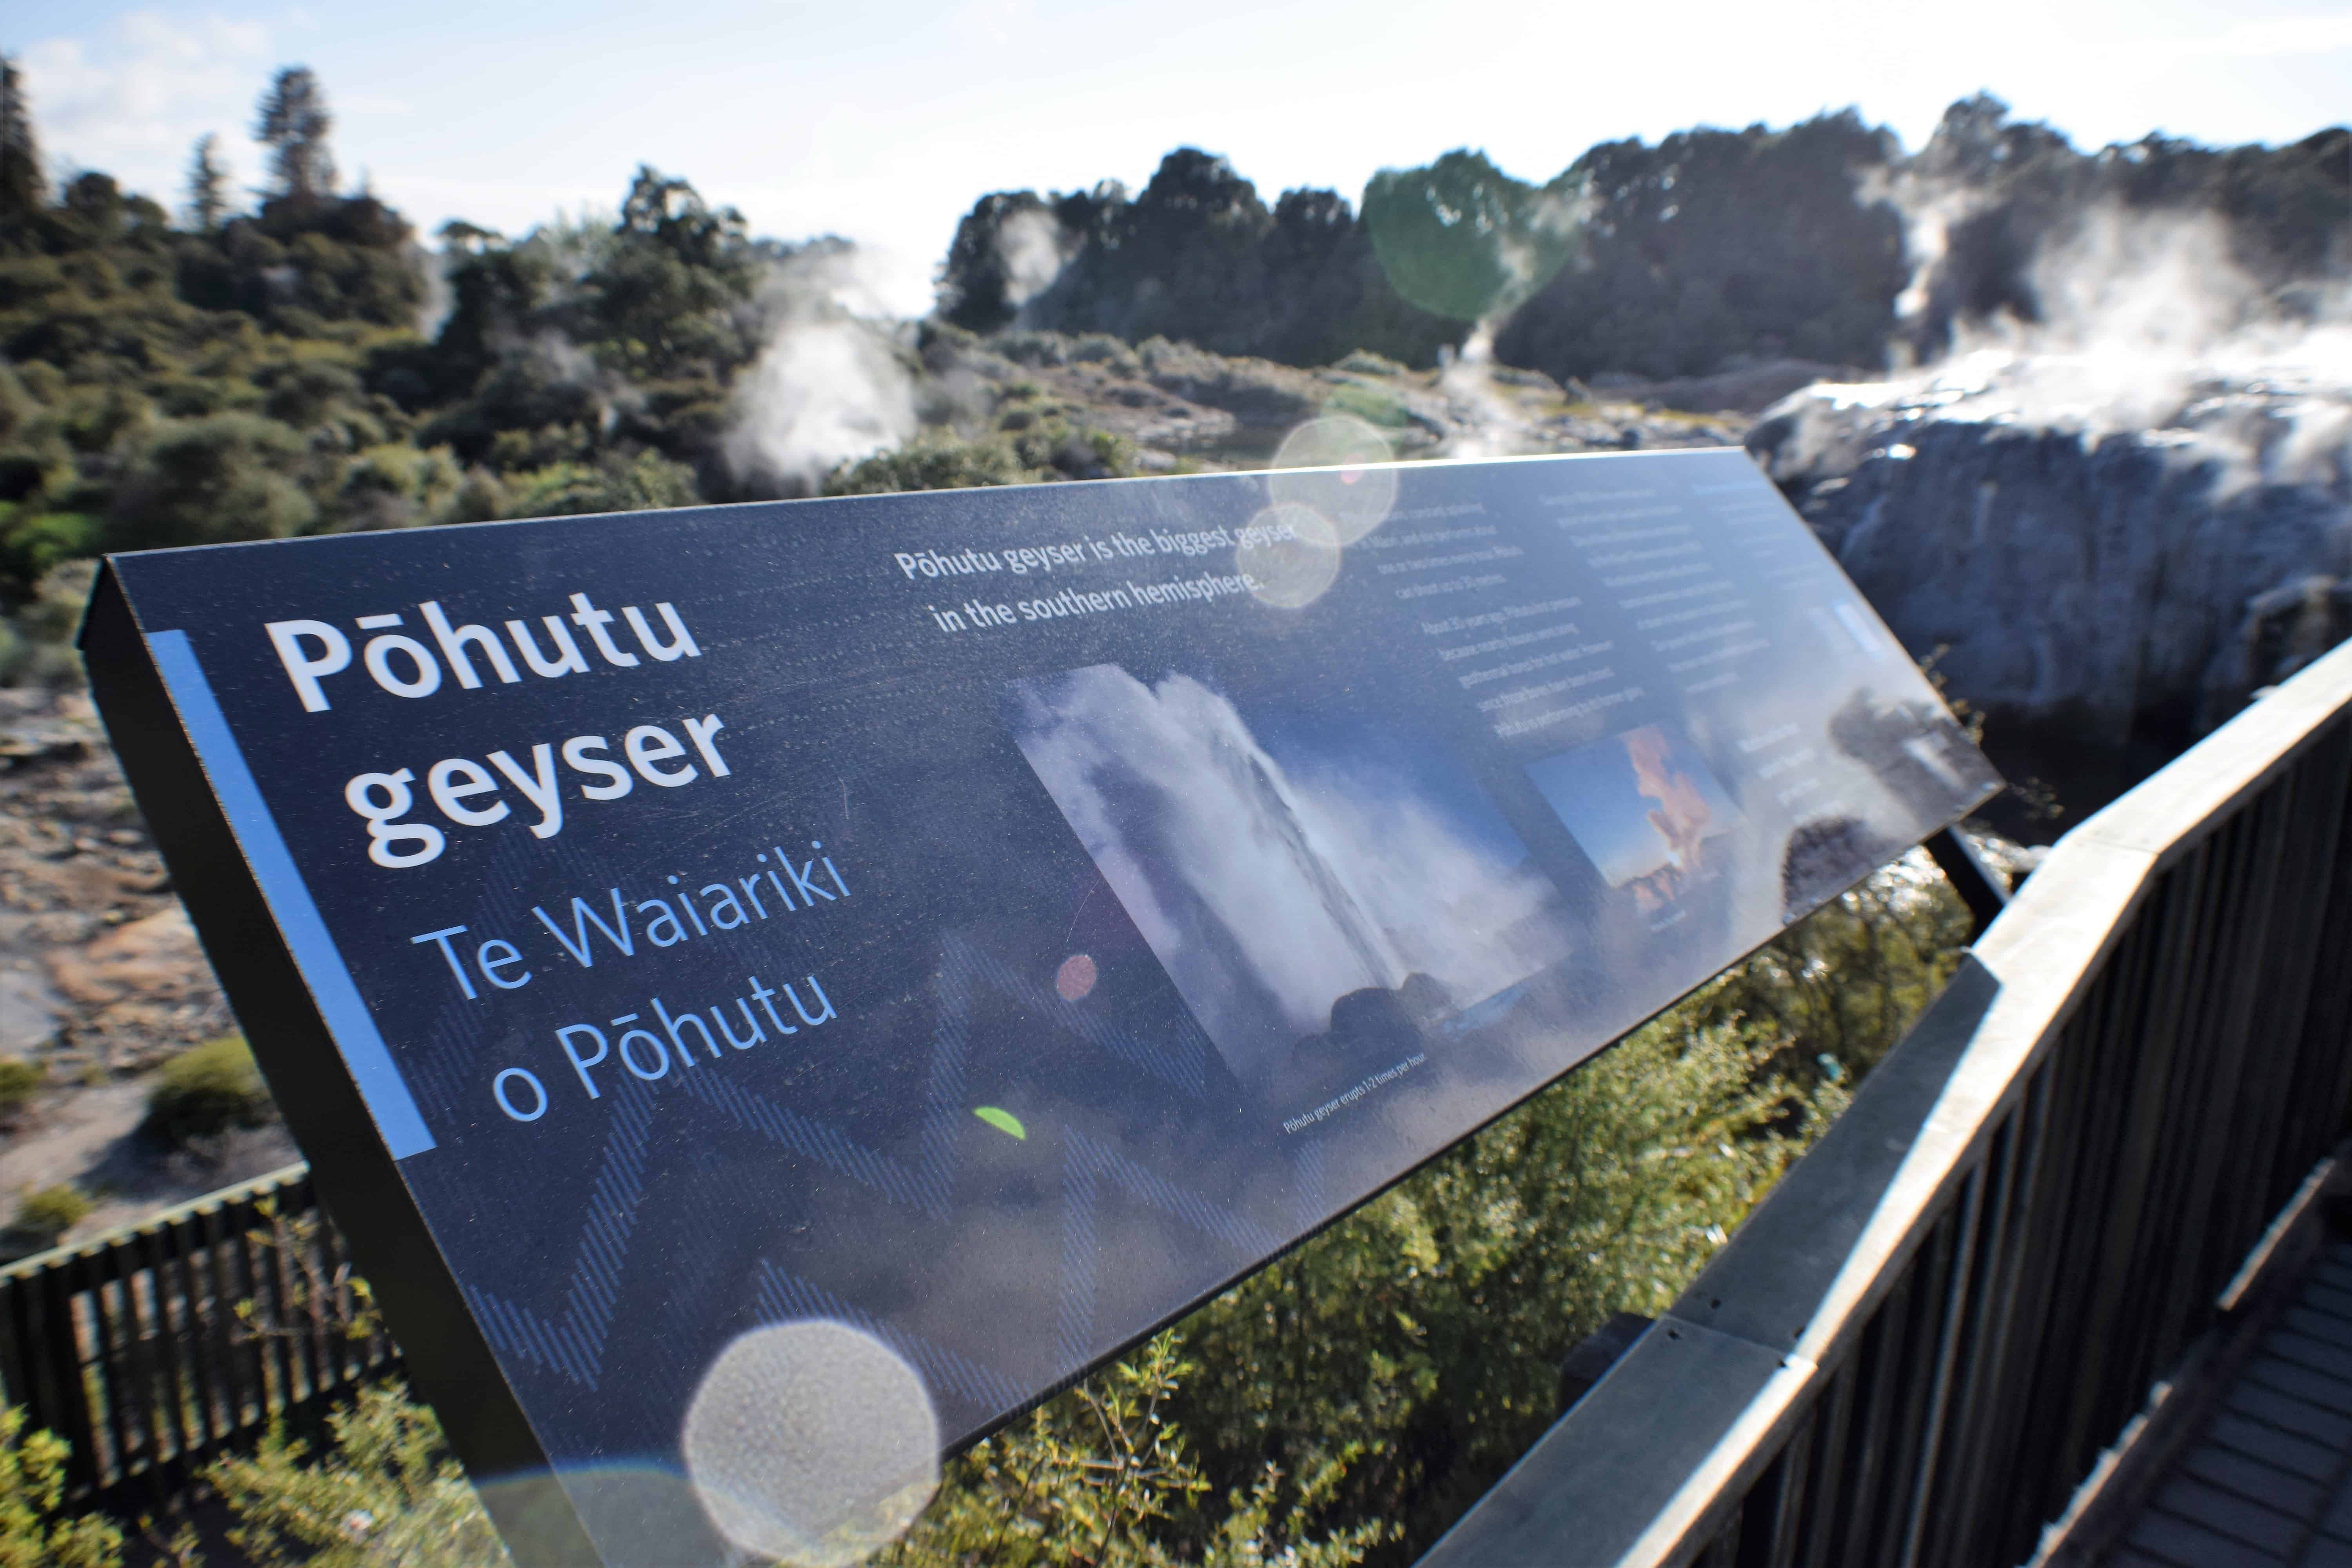 Information board of the Pohutu Geyser